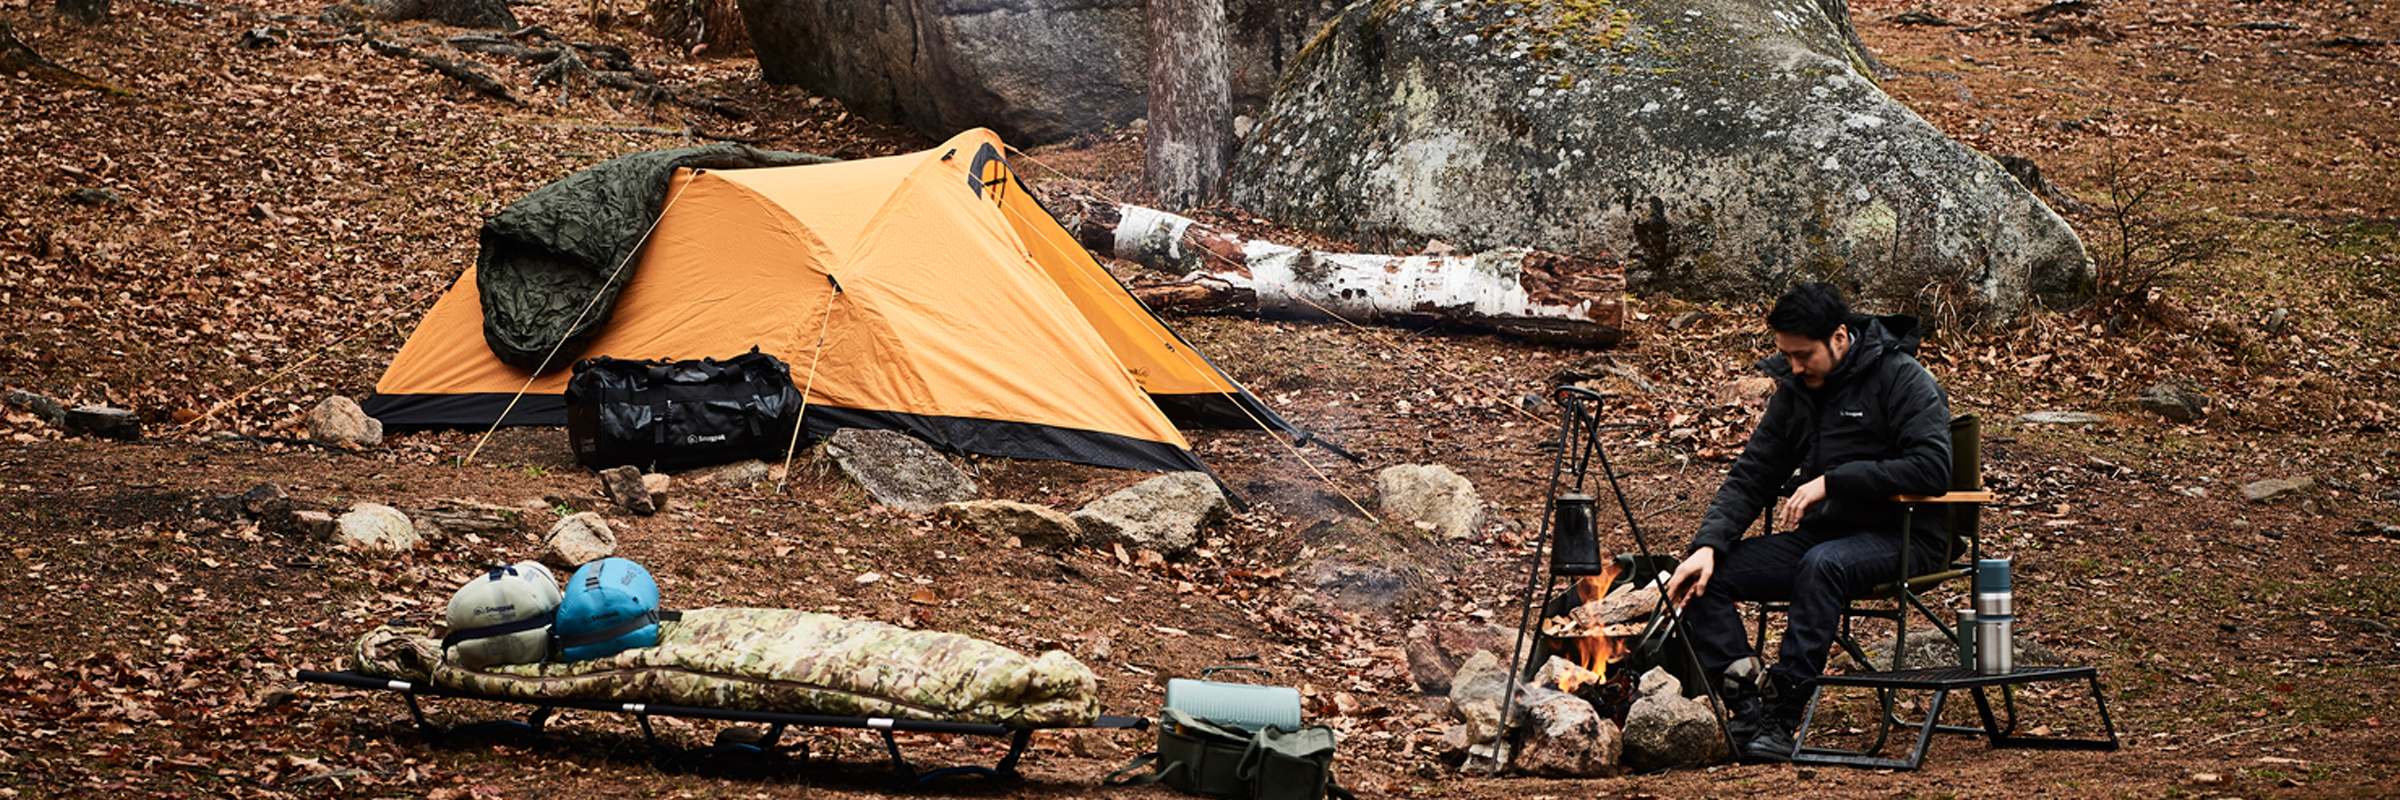 Snugpak(スナグパック) ジャーニートリオ 3人用 ドーム型テント フットプリント付属 防風 耐水圧4000 おうちキャンプ 釣り イ  定番のお歳暮 アウトドア、釣り、旅行用品